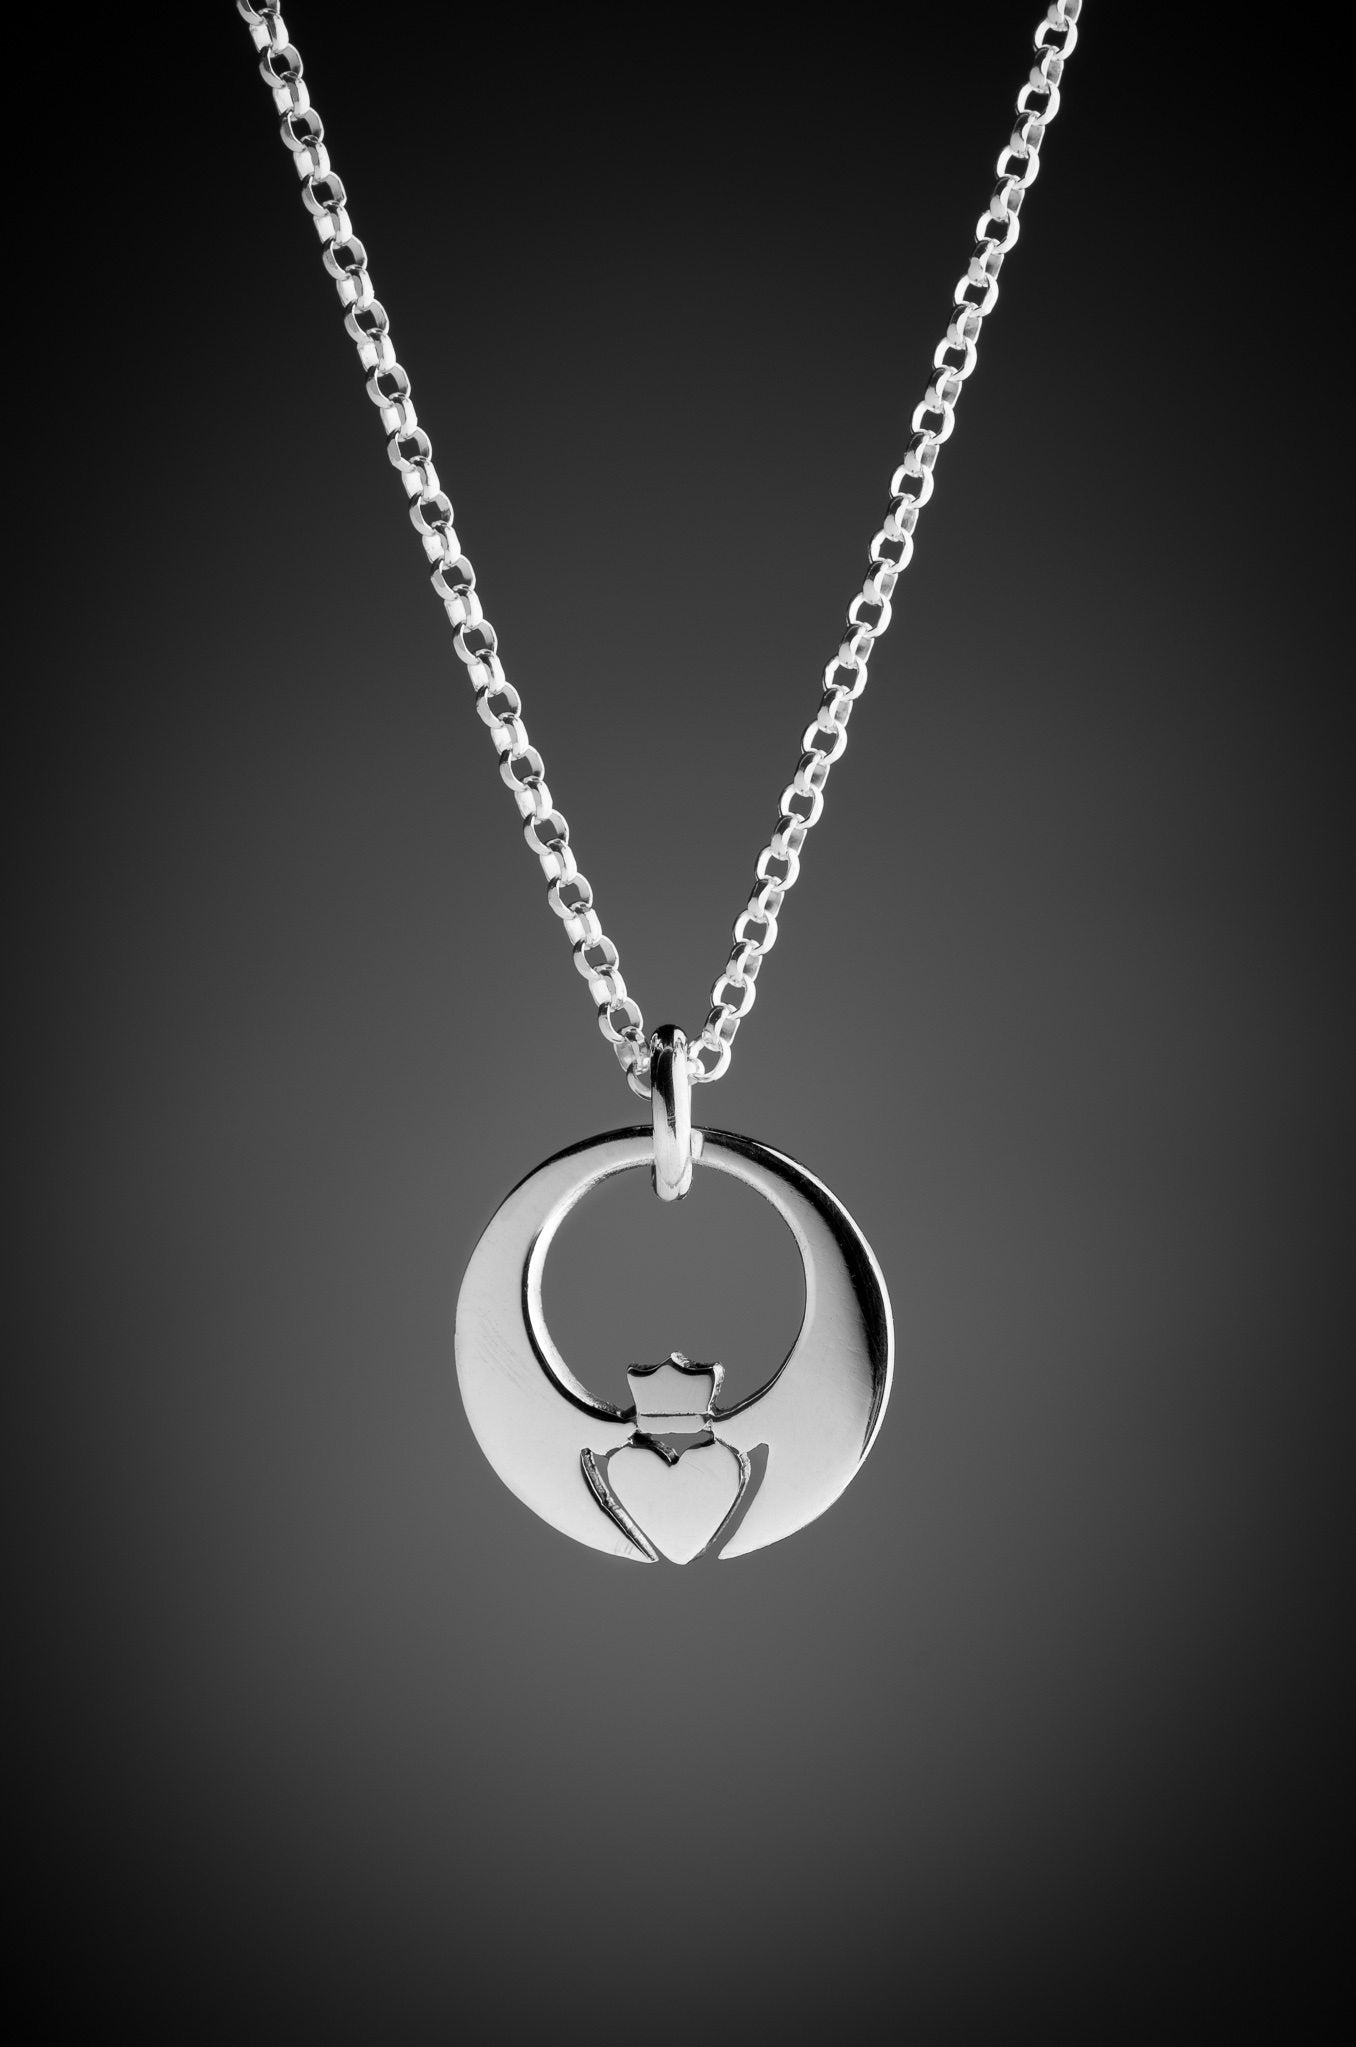 Silver Claddagh pendant